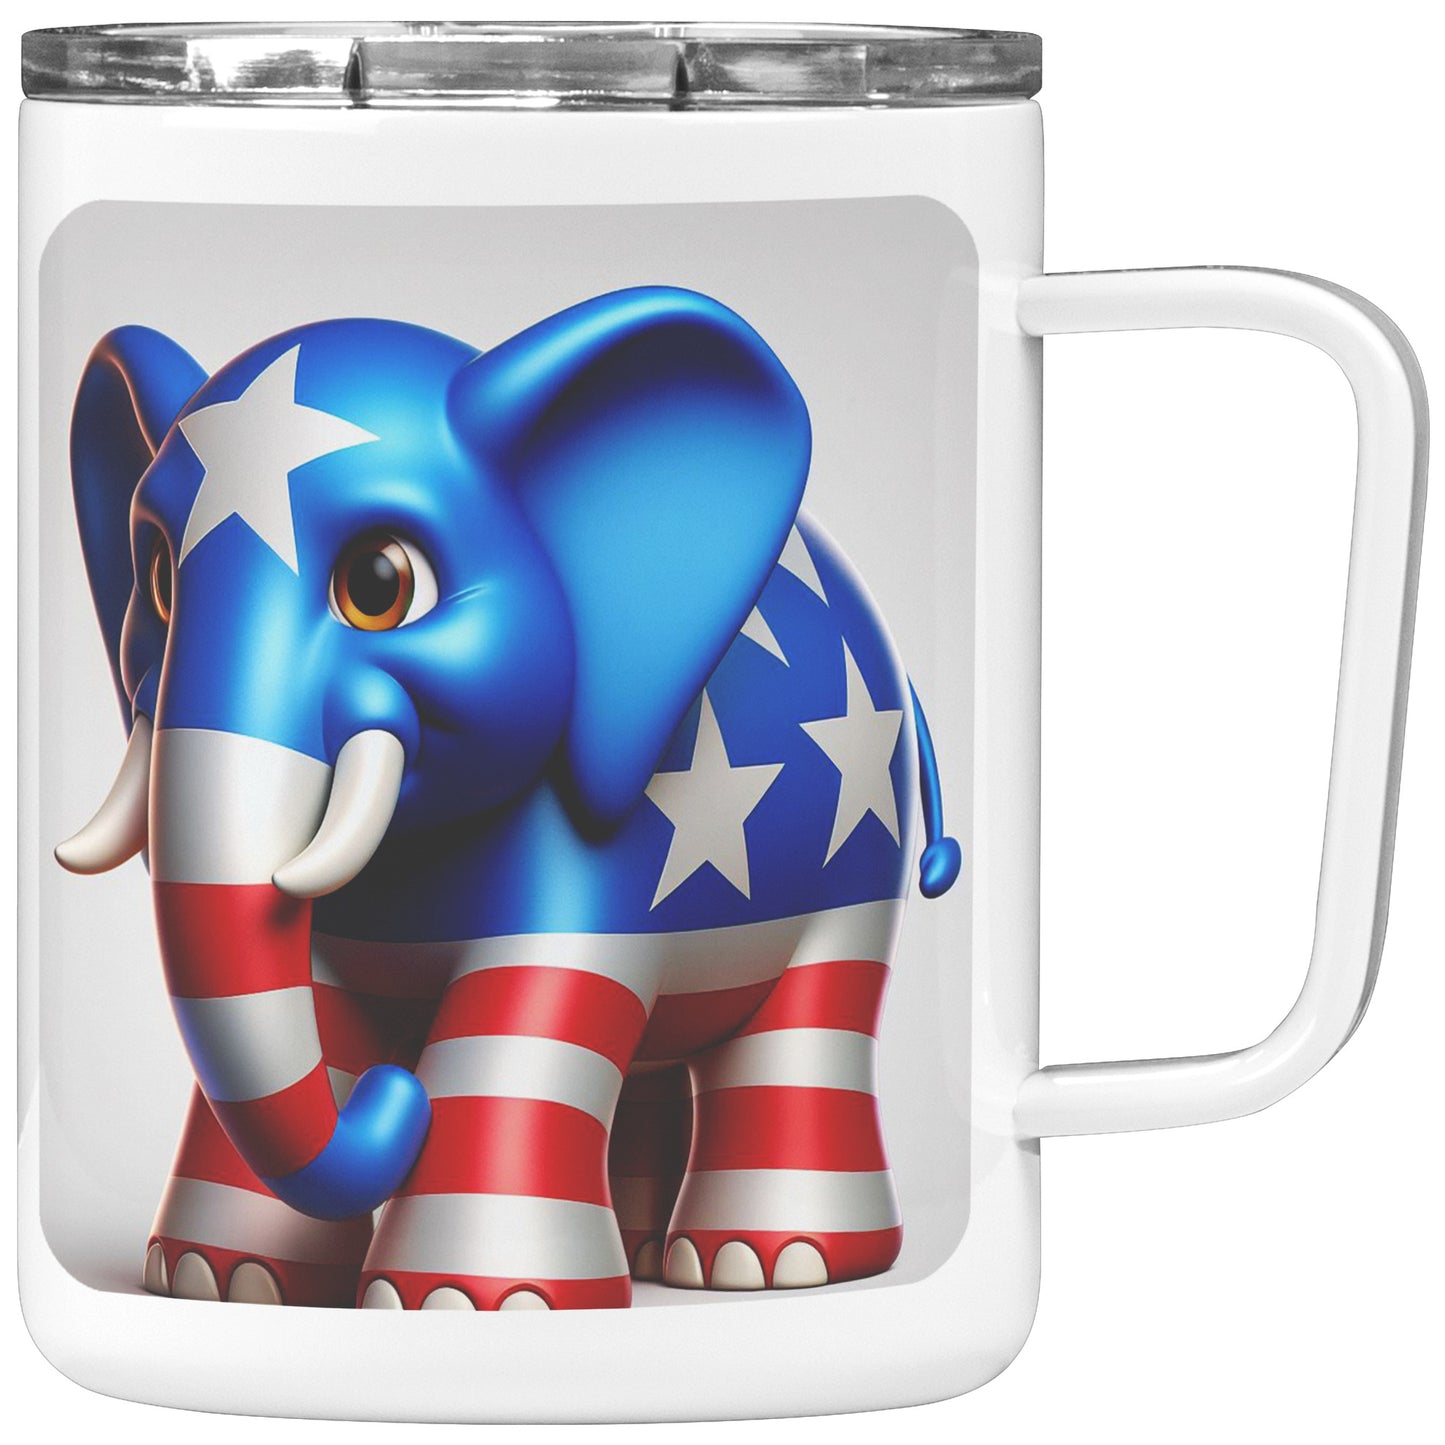 US Political Symbol for Republicans - Coffee Mug #14